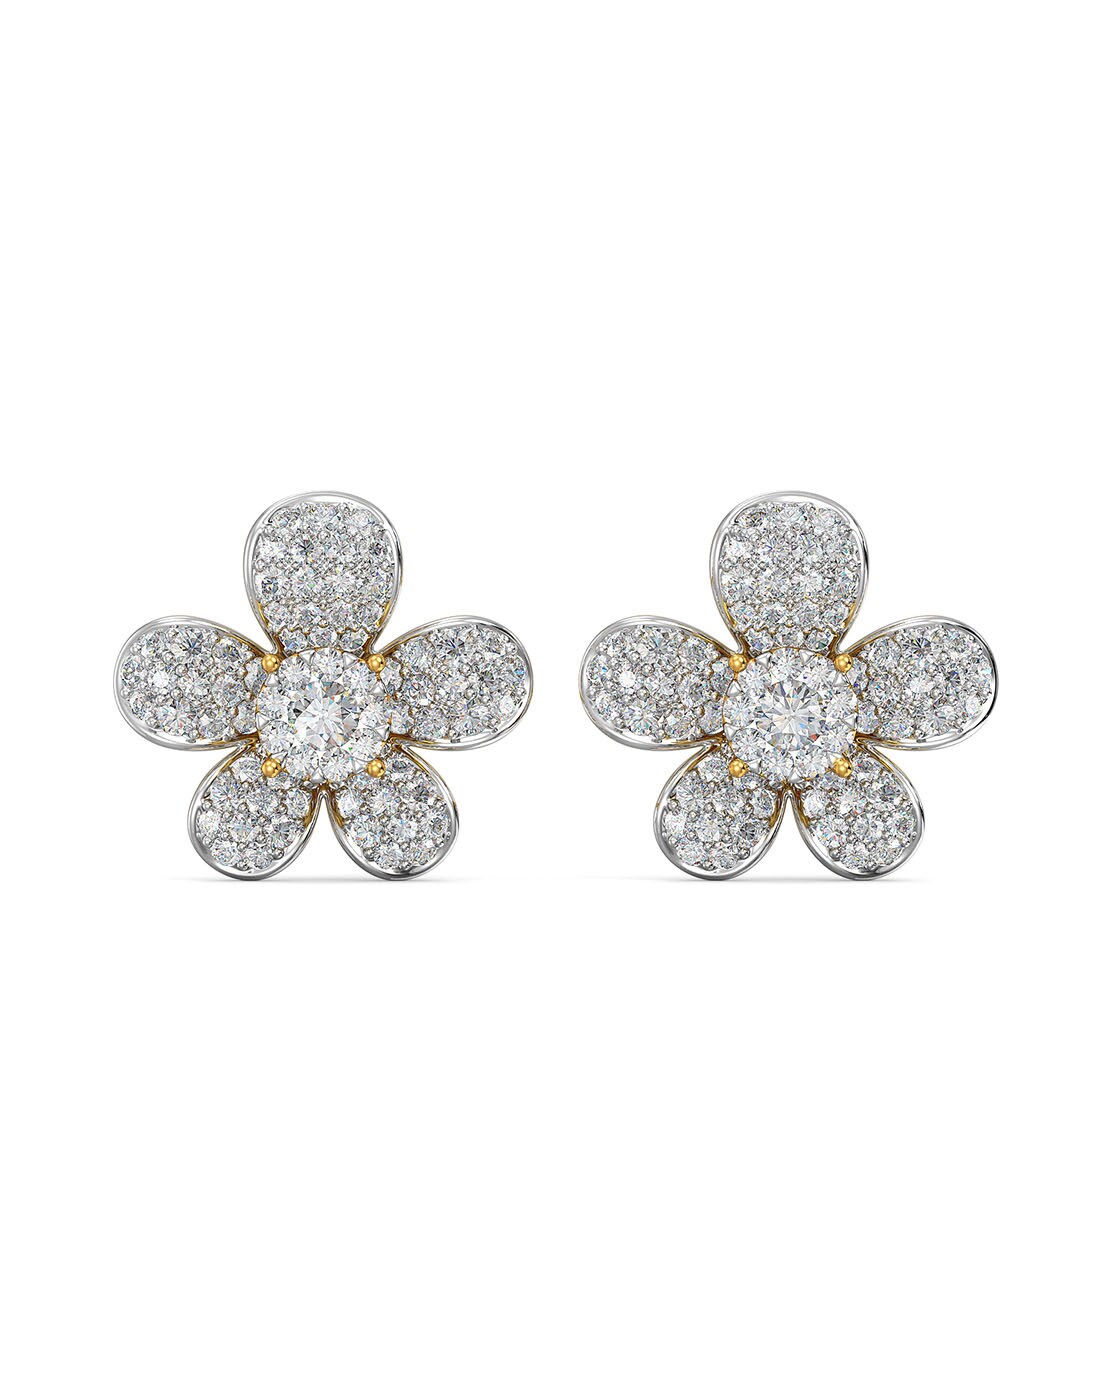 Yellow & White Diamond Flower Cluster Earrings 14K W Gold 1.20ct - IE54